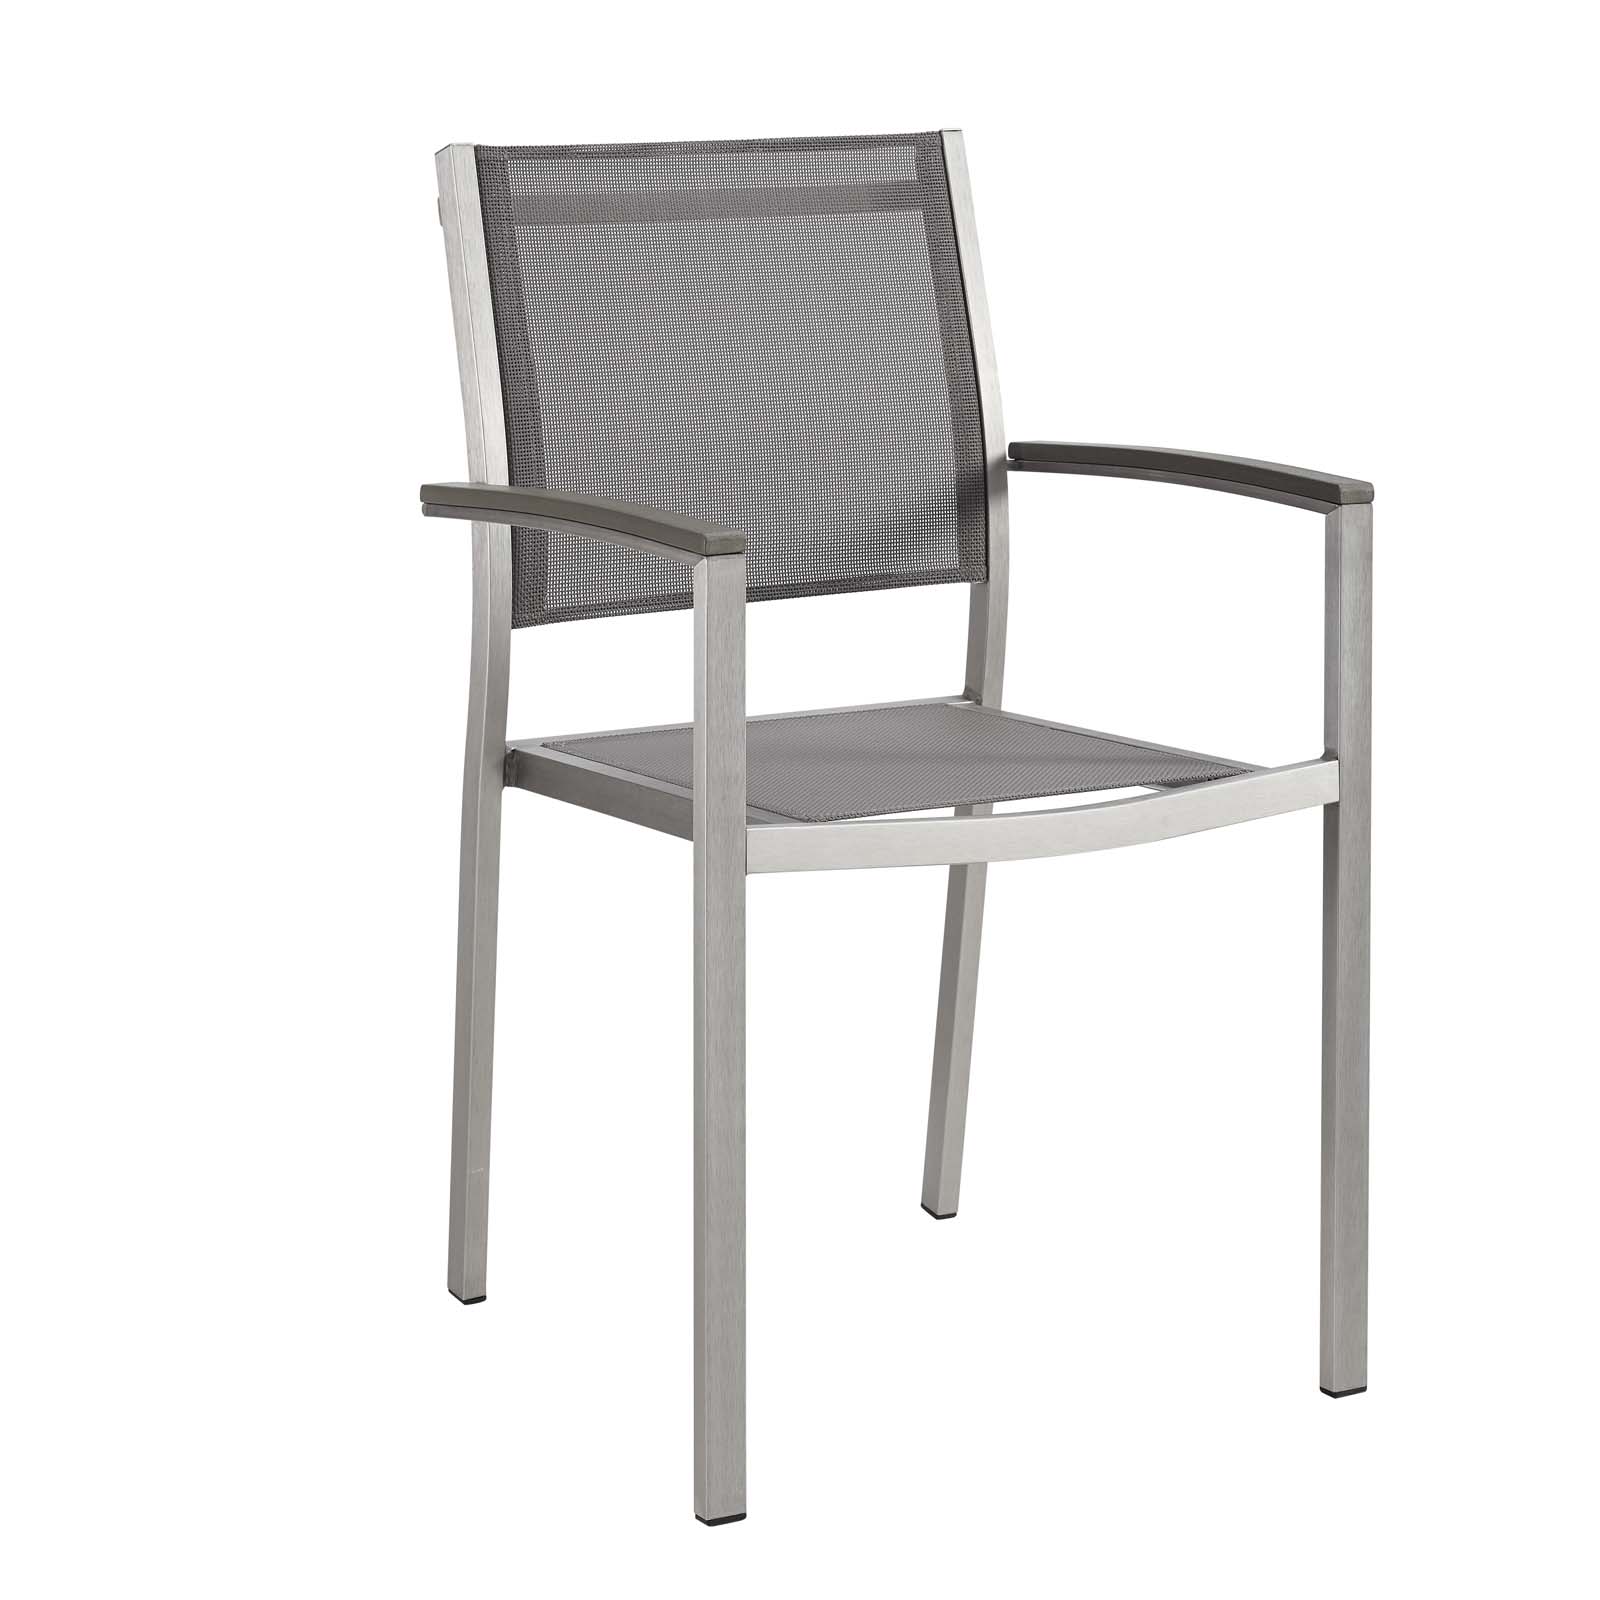 Modern Contemporary Urban Design Outdoor Patio Balcony Garden Furniture Side Dining Chair, Aluminum Metal Steel, Grey Gray - image 1 of 4